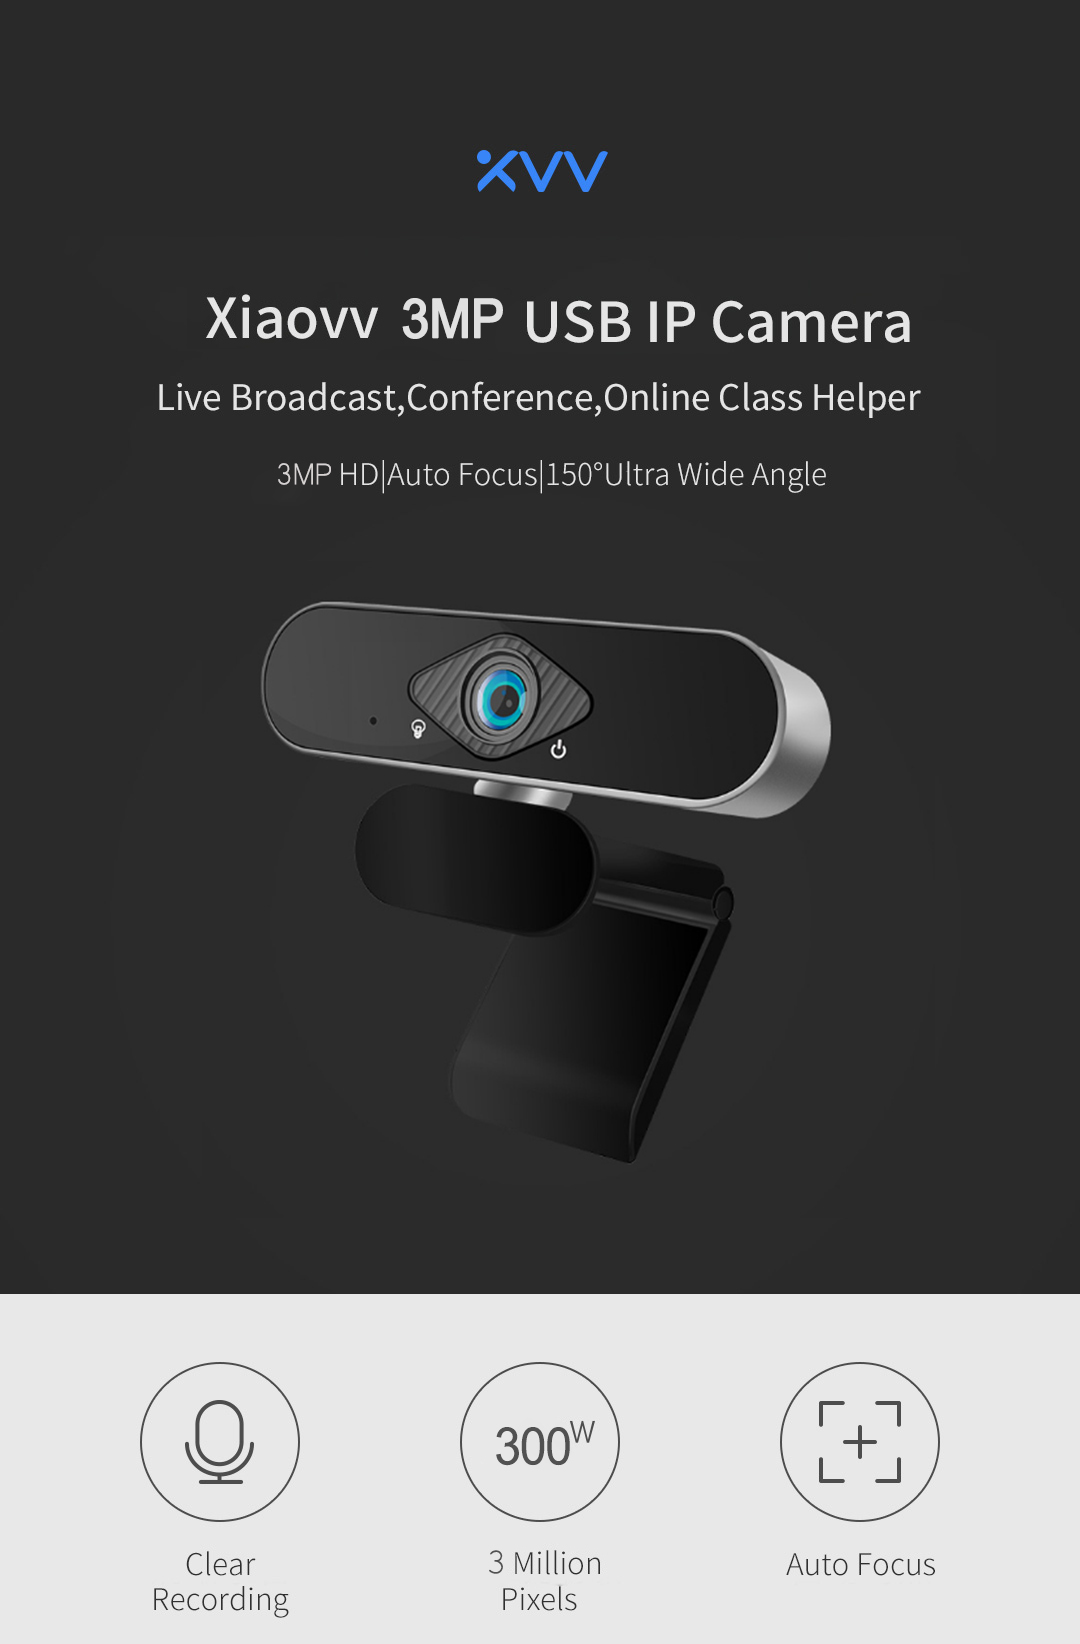 Upgraded-Xiaovv-3MP-USB-Webcam-IP-Camera-150deg-Ultra-Wide-Angle-Image-Optimization-Beauty-Processin-1722332-1